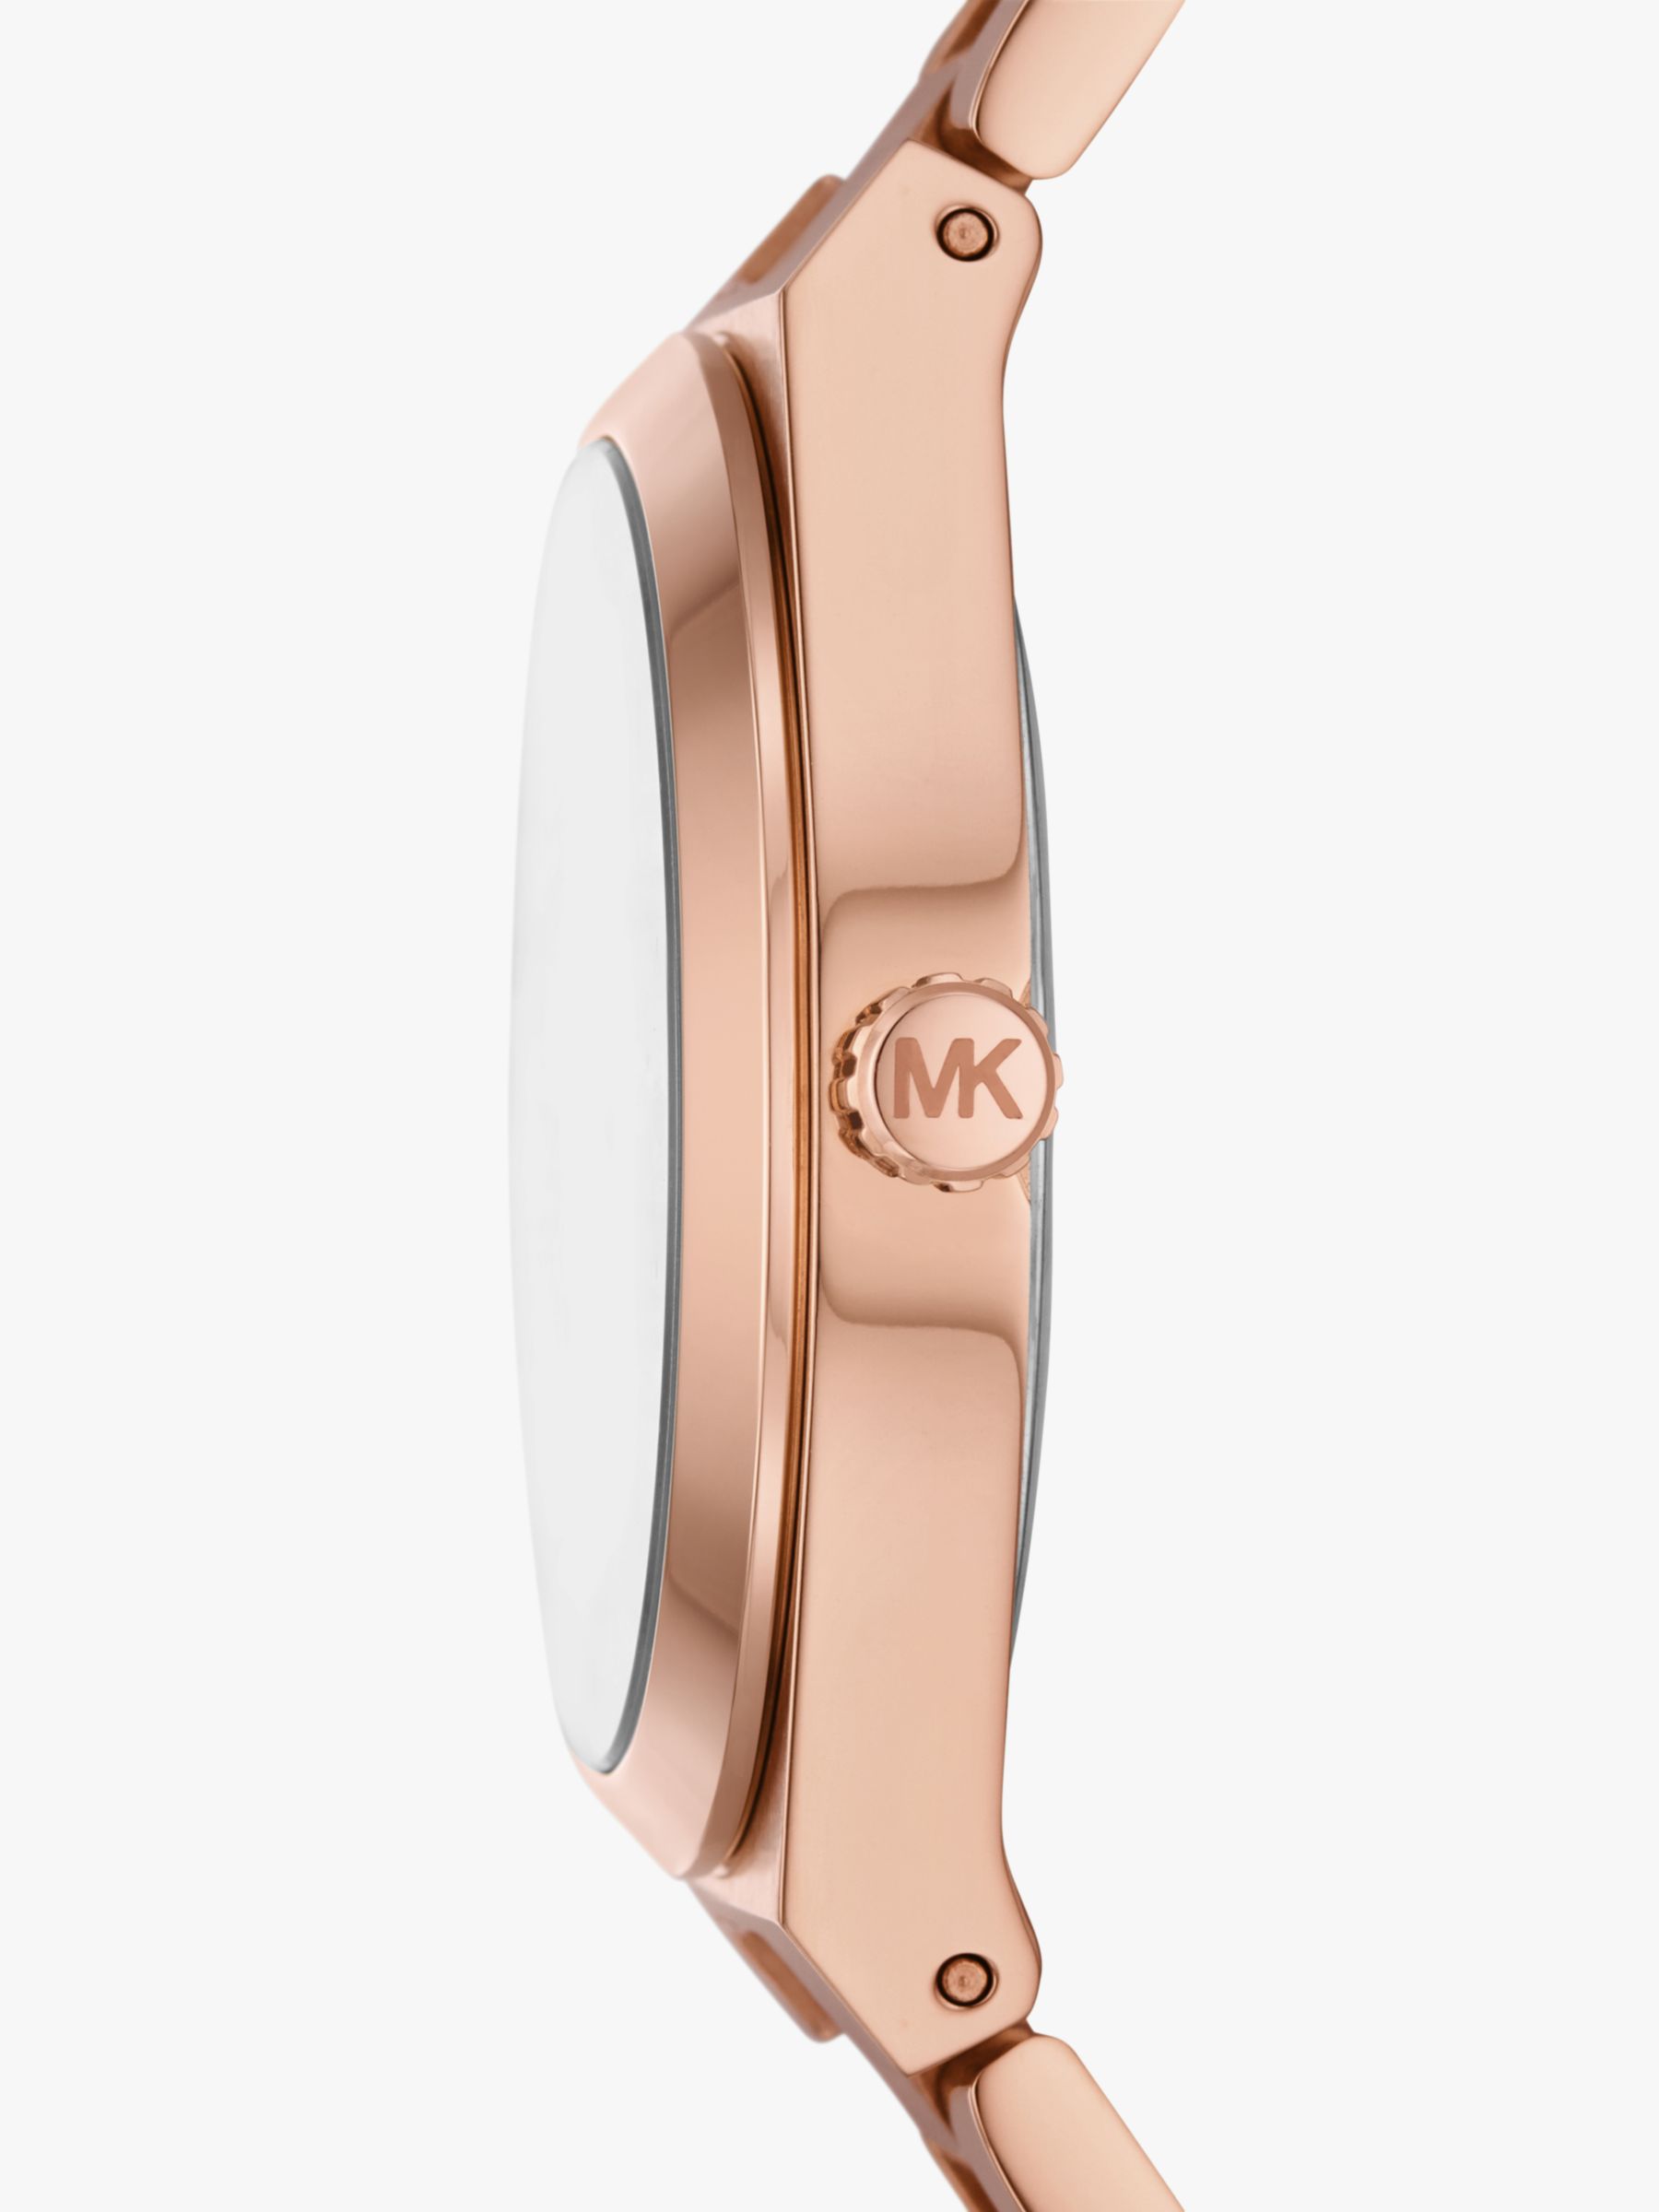 Michael Kors MK7462 Women's Lennox Crystal Bracelet Strap Watch, Rose Gold/Pink